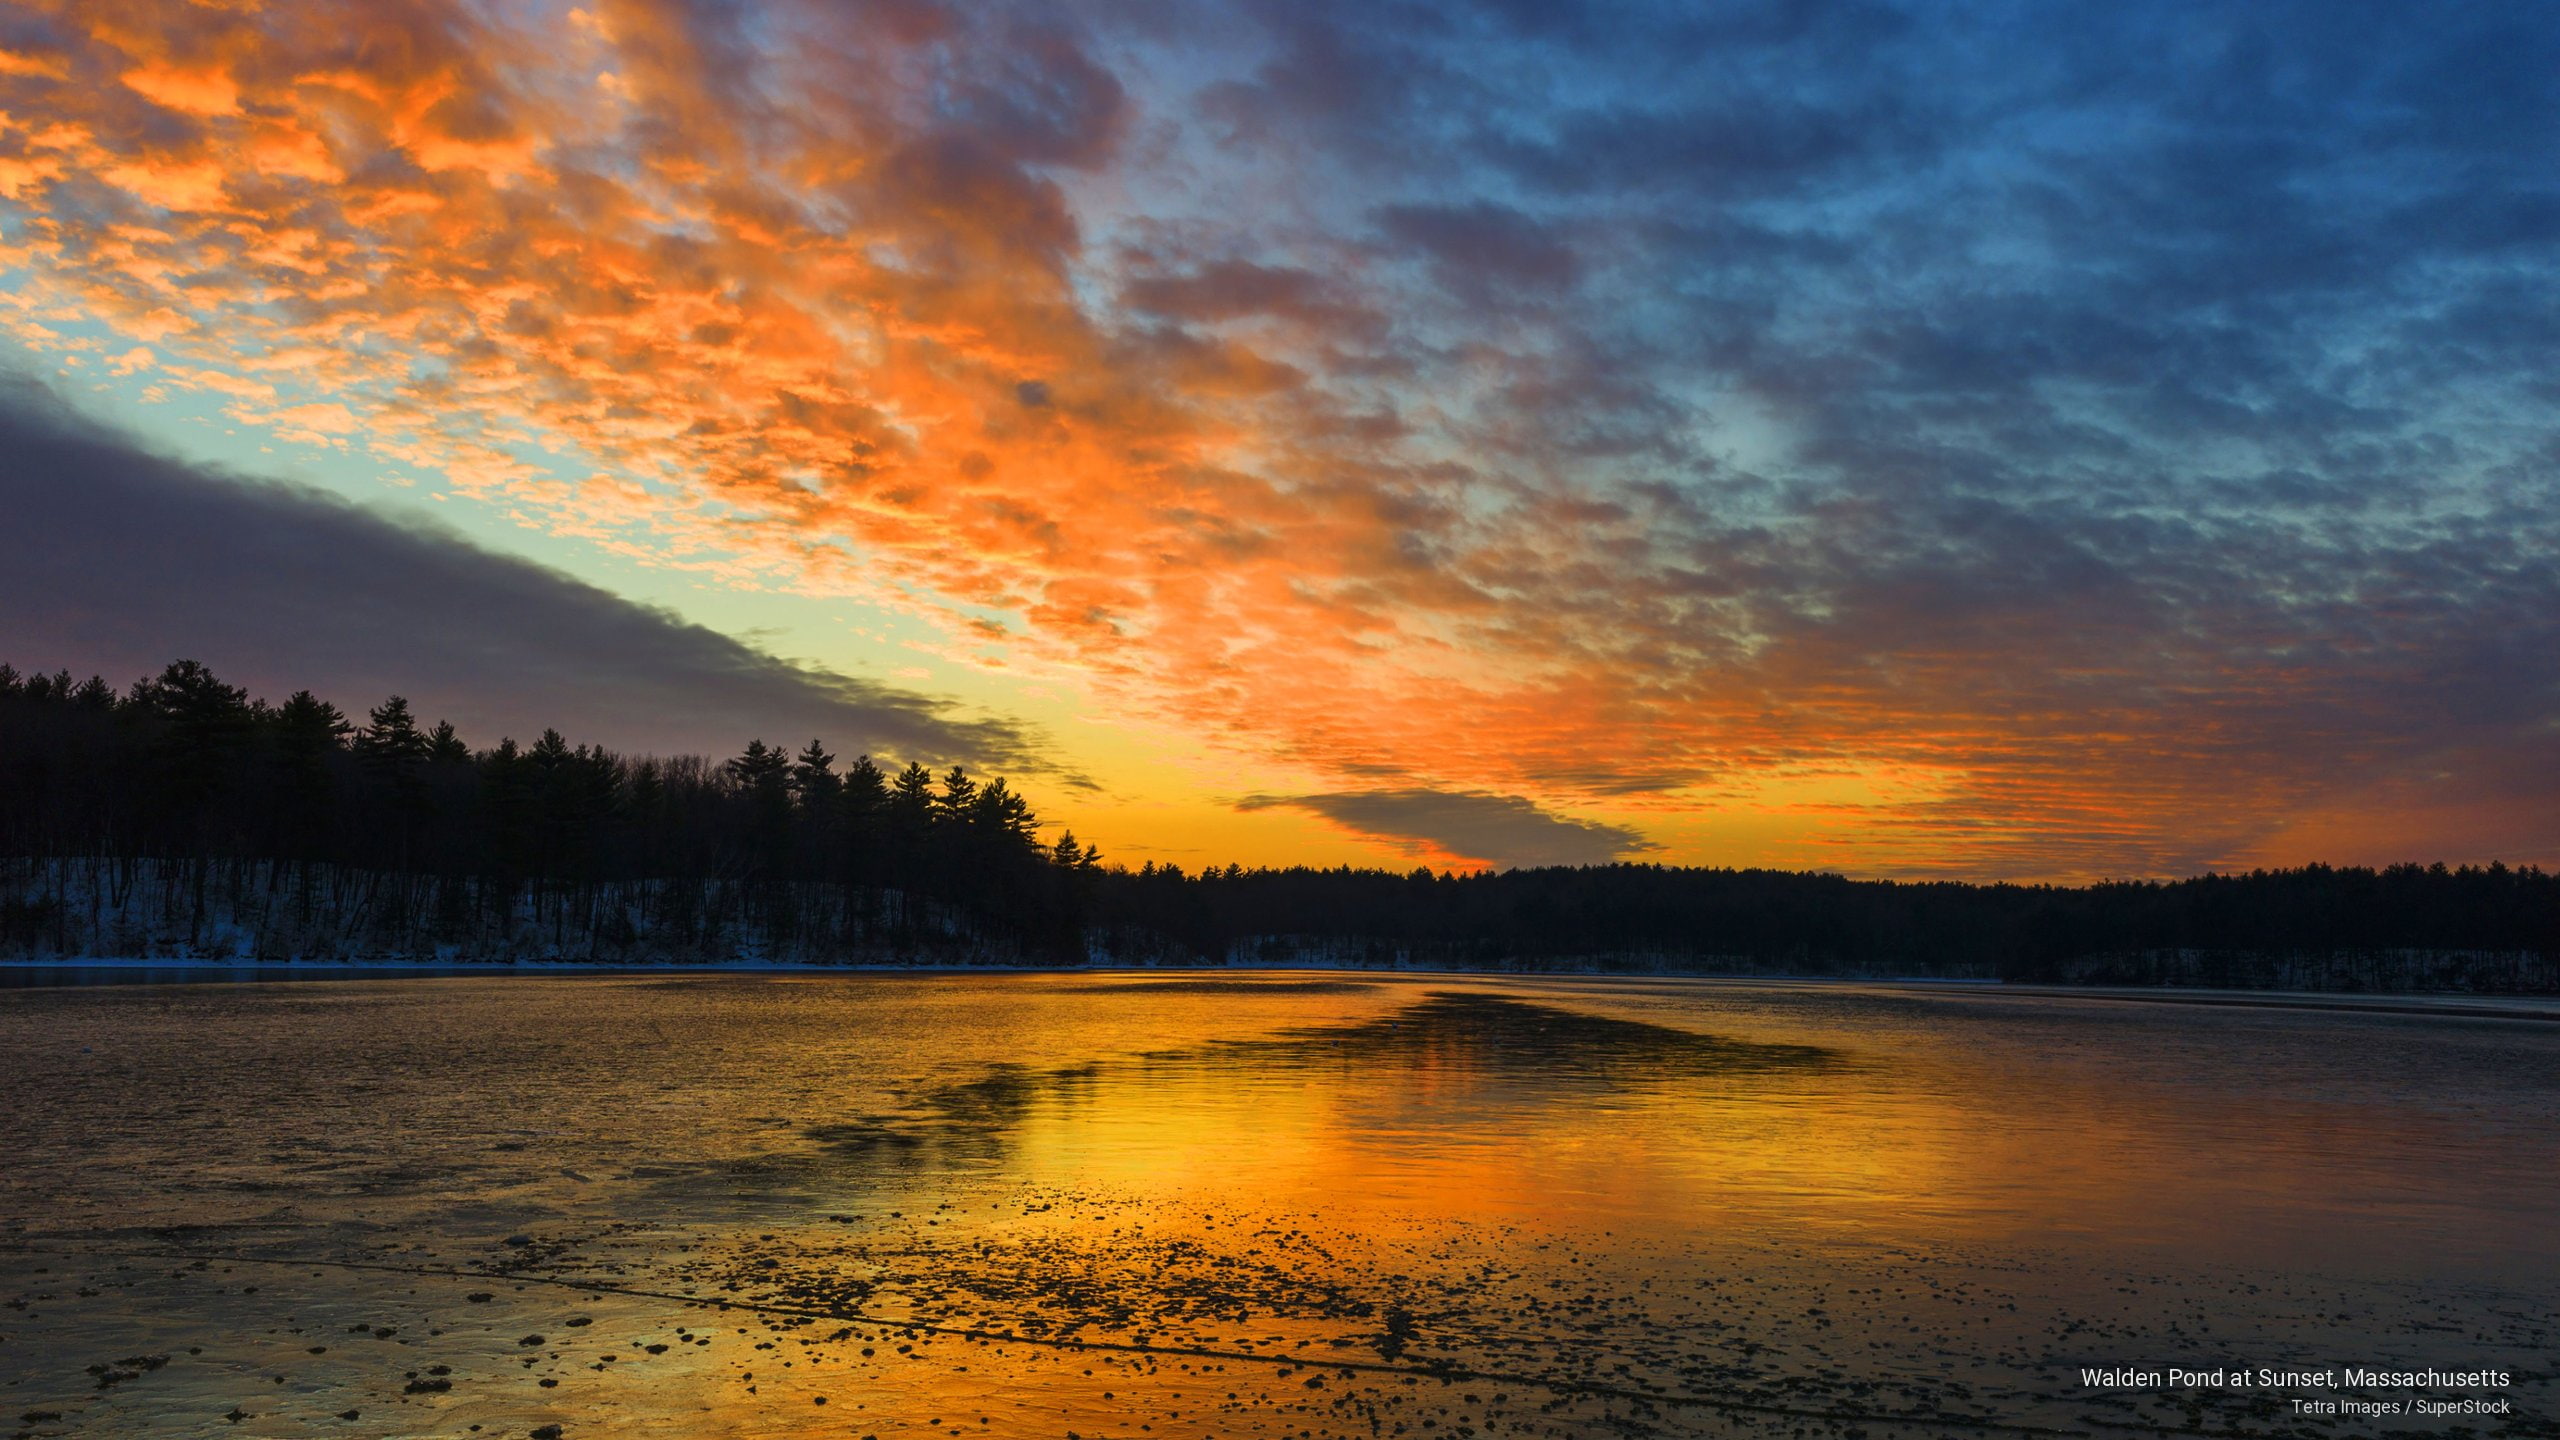 Walden Pond at Sunset, Massachusetts, Sunrises/Sunsets